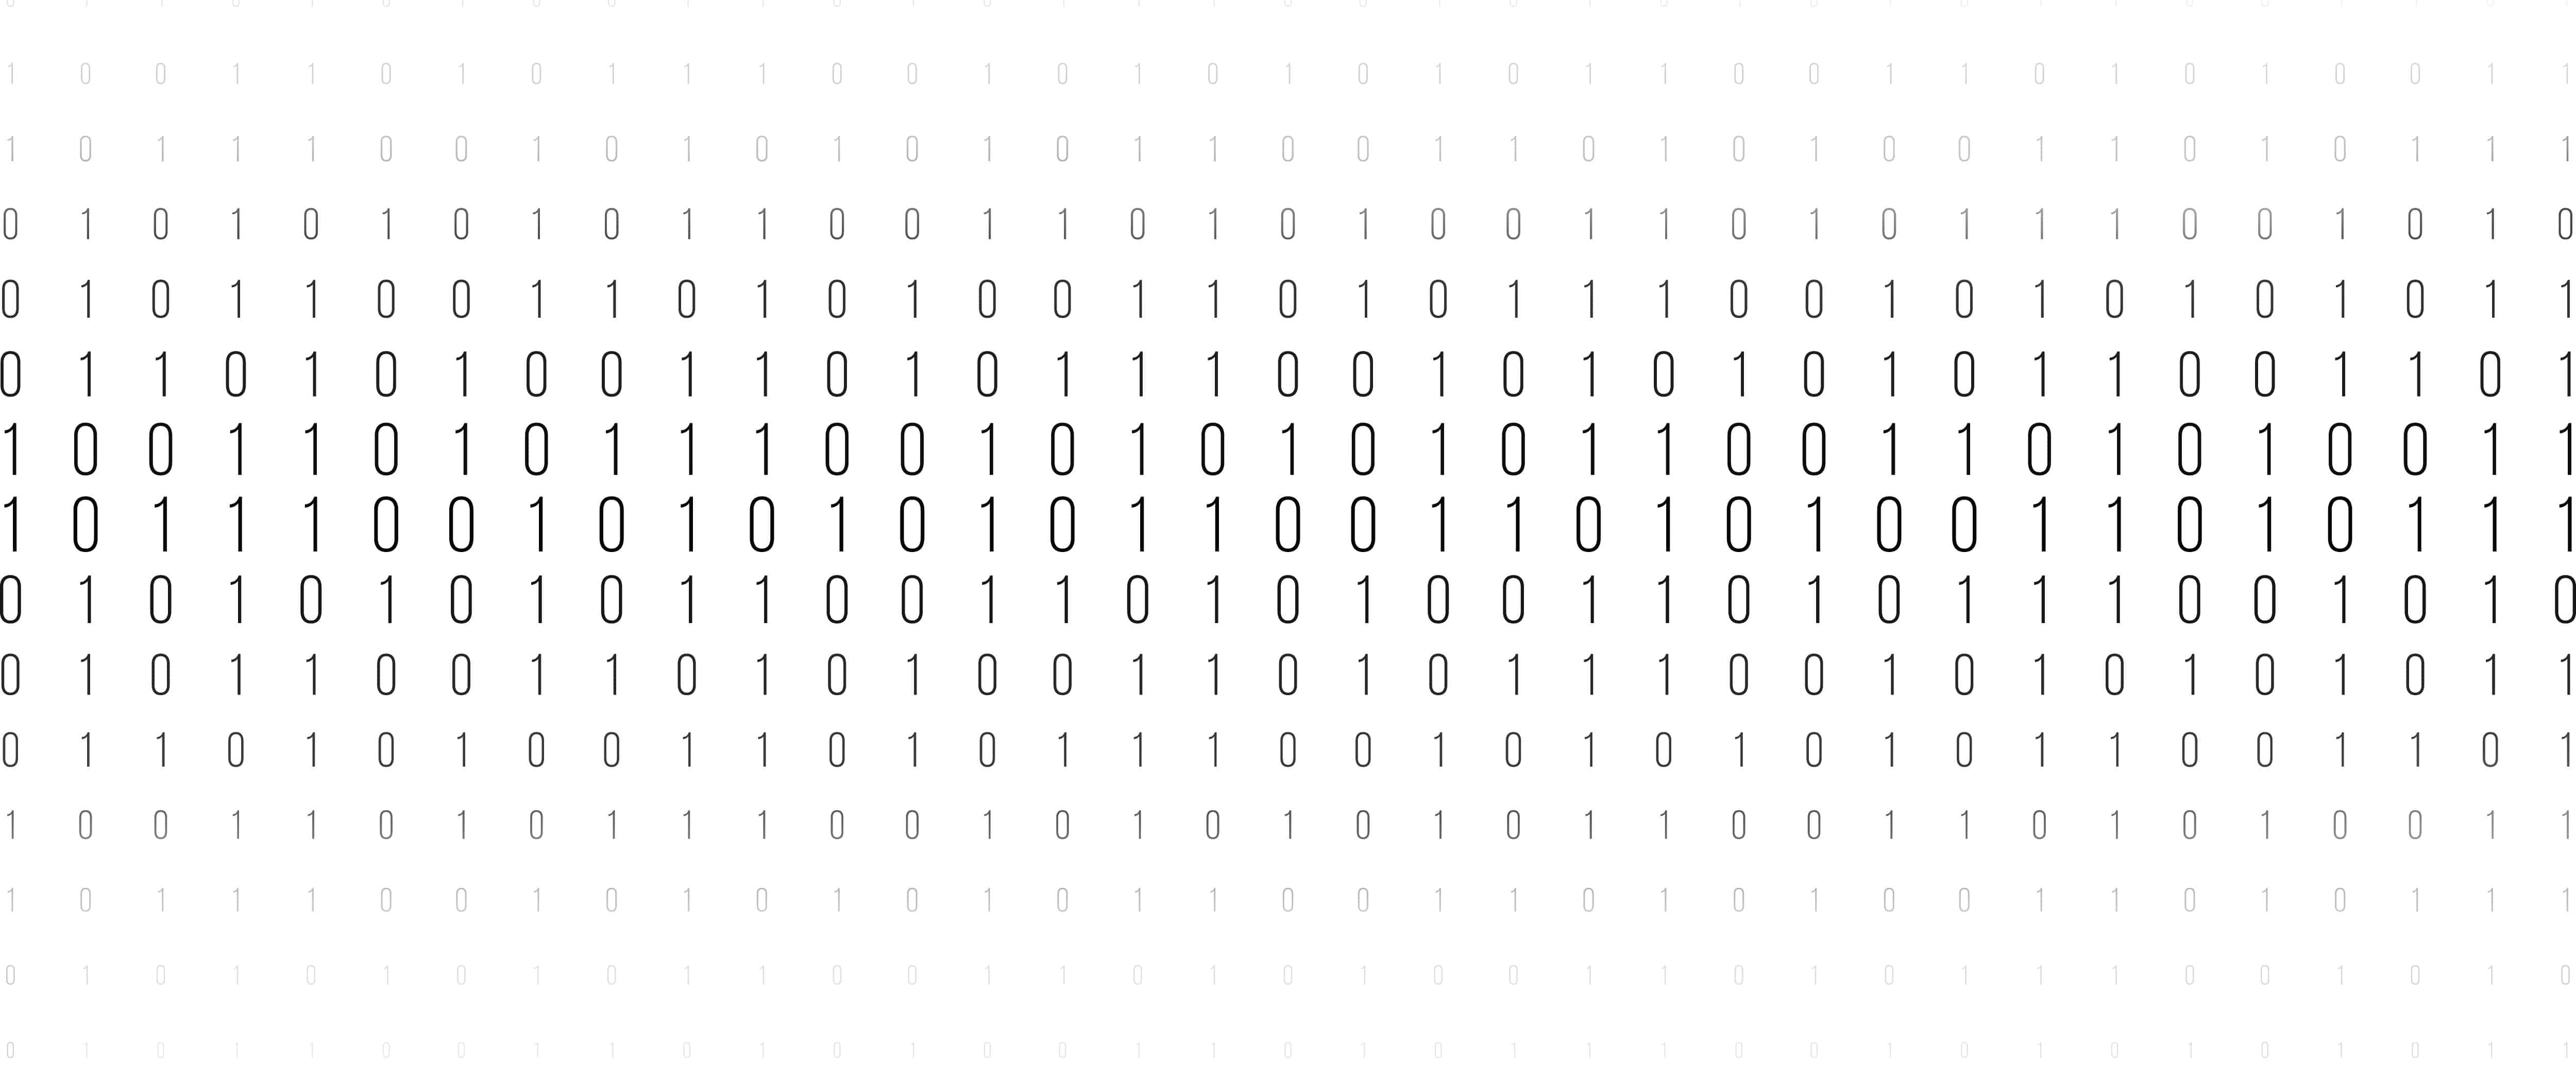 binary code for price optimization AI